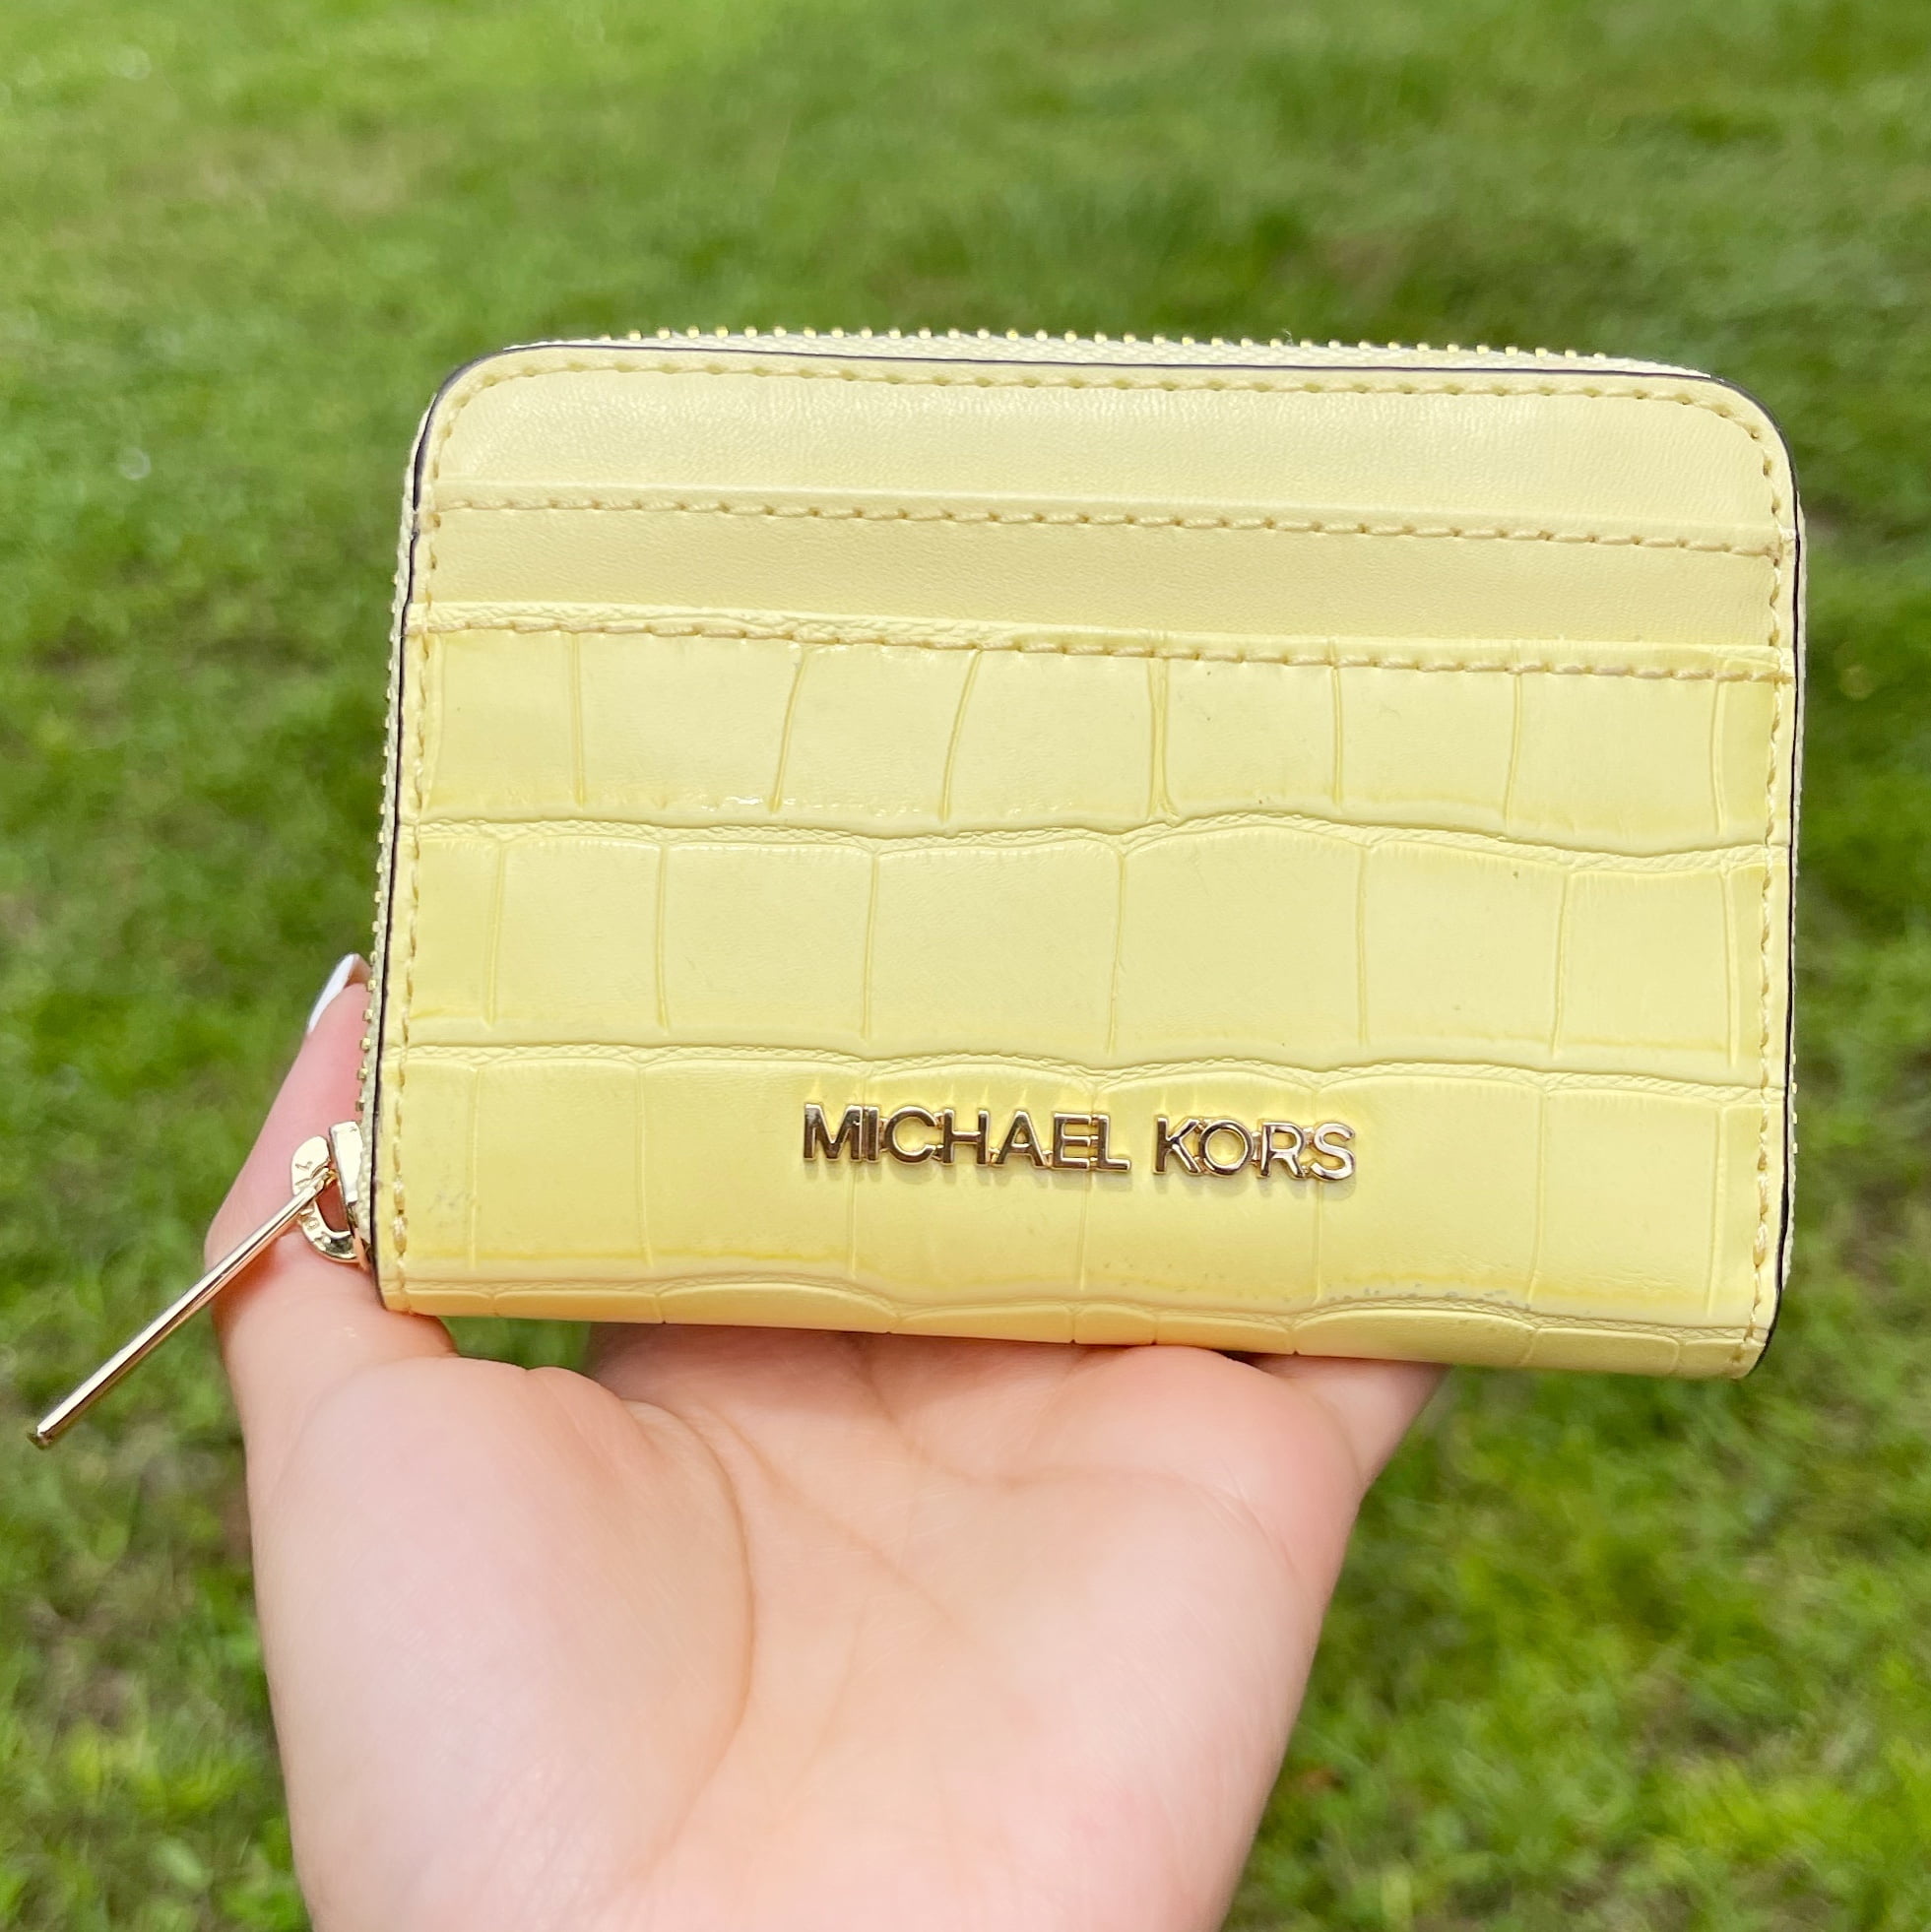 Michael Kors Jet Set Travel Medium Card Case Wallet Leather Buttercup Yellow Croc Walmart.com